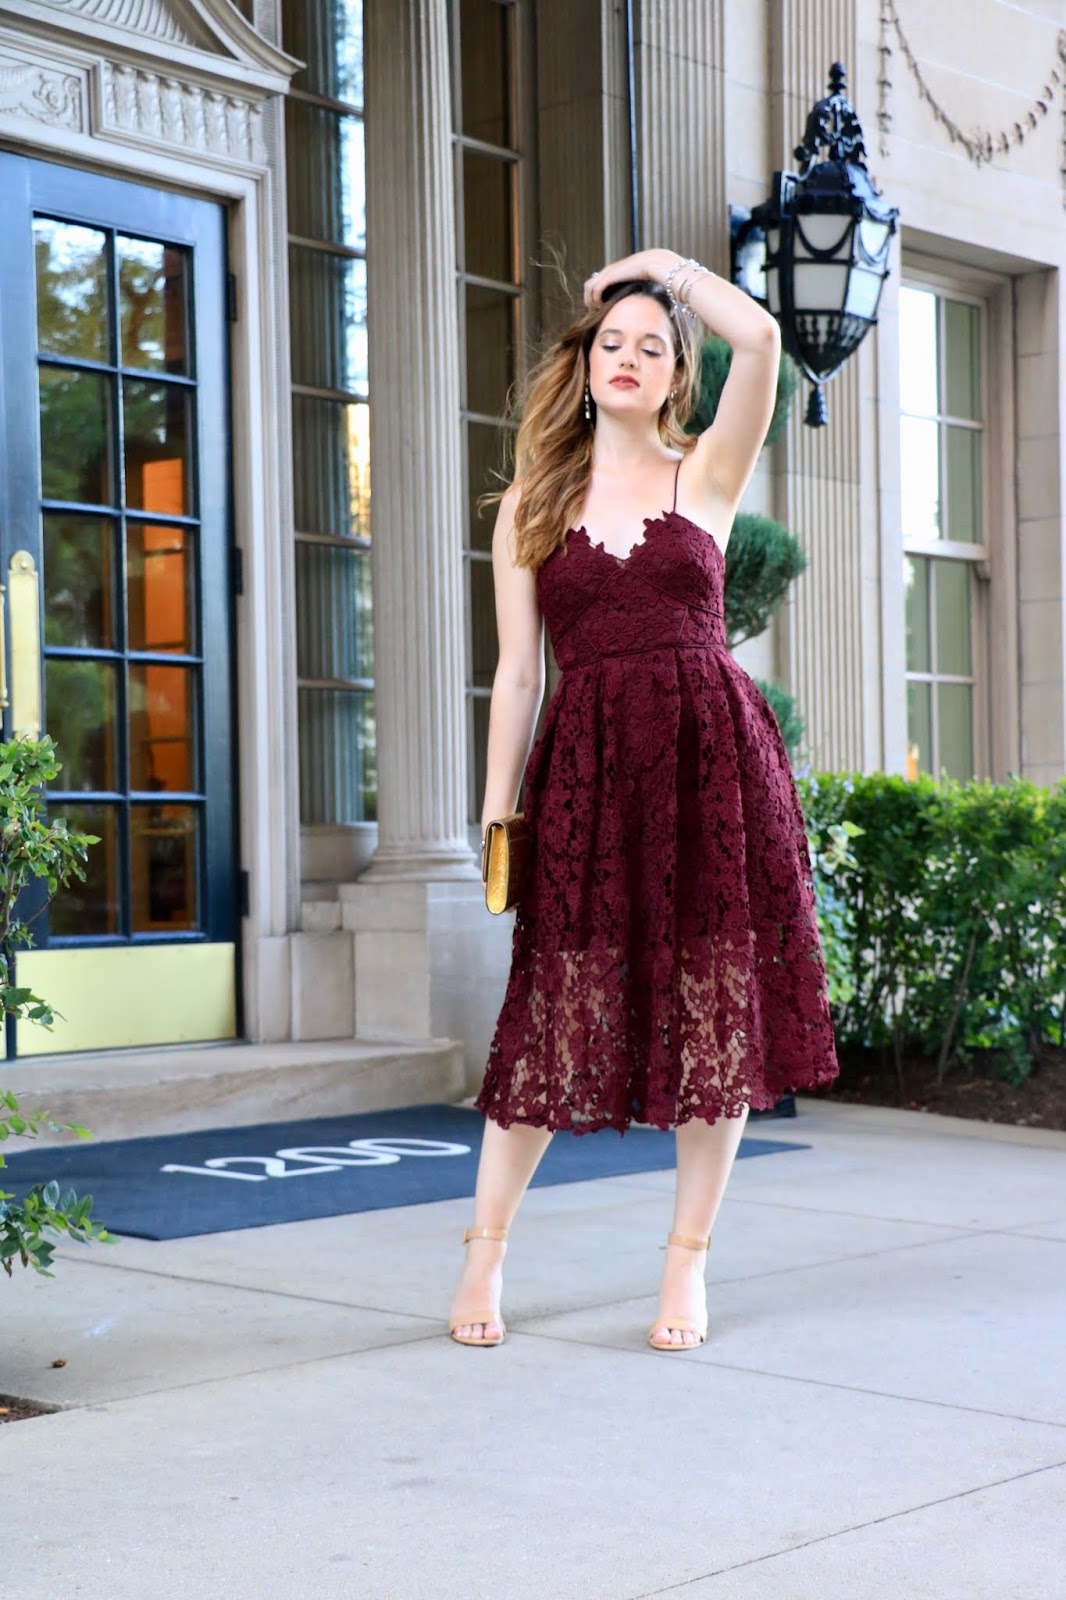 Nyc fashion blogger Kathleen Harper wearing a lace burgundy dress